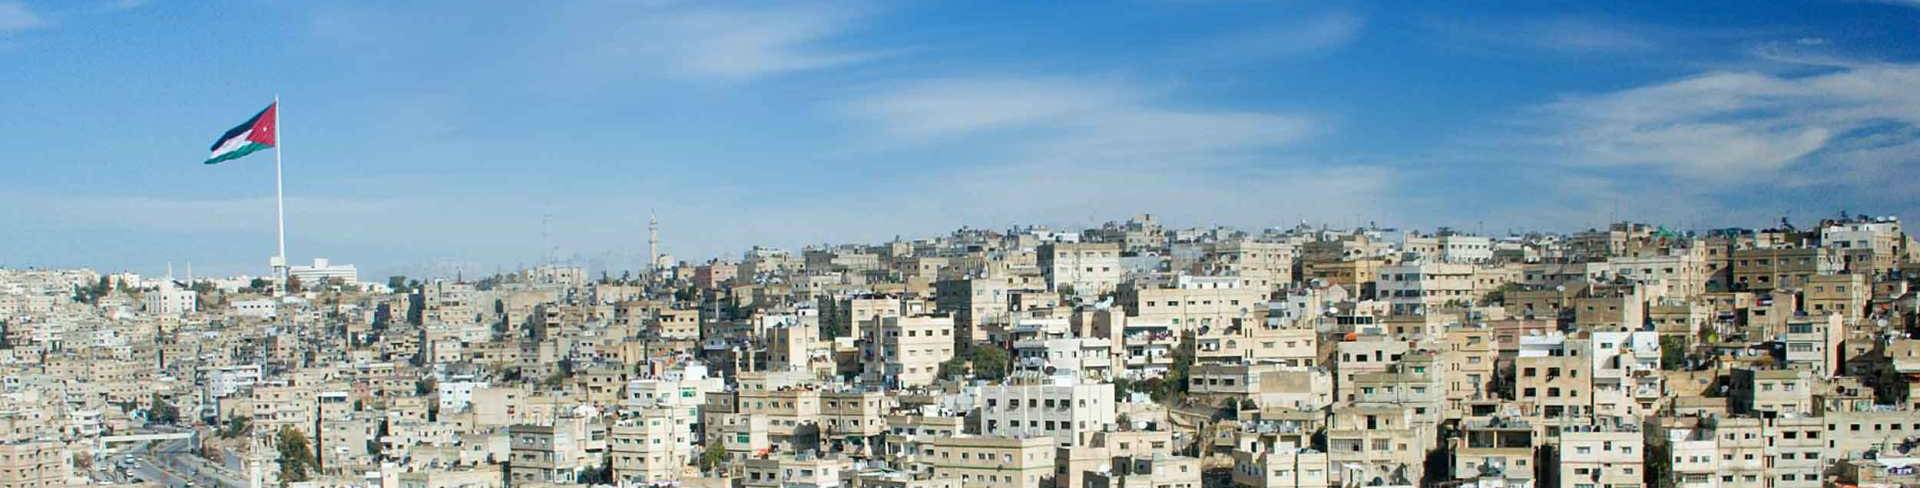 Амман - город в Иордании